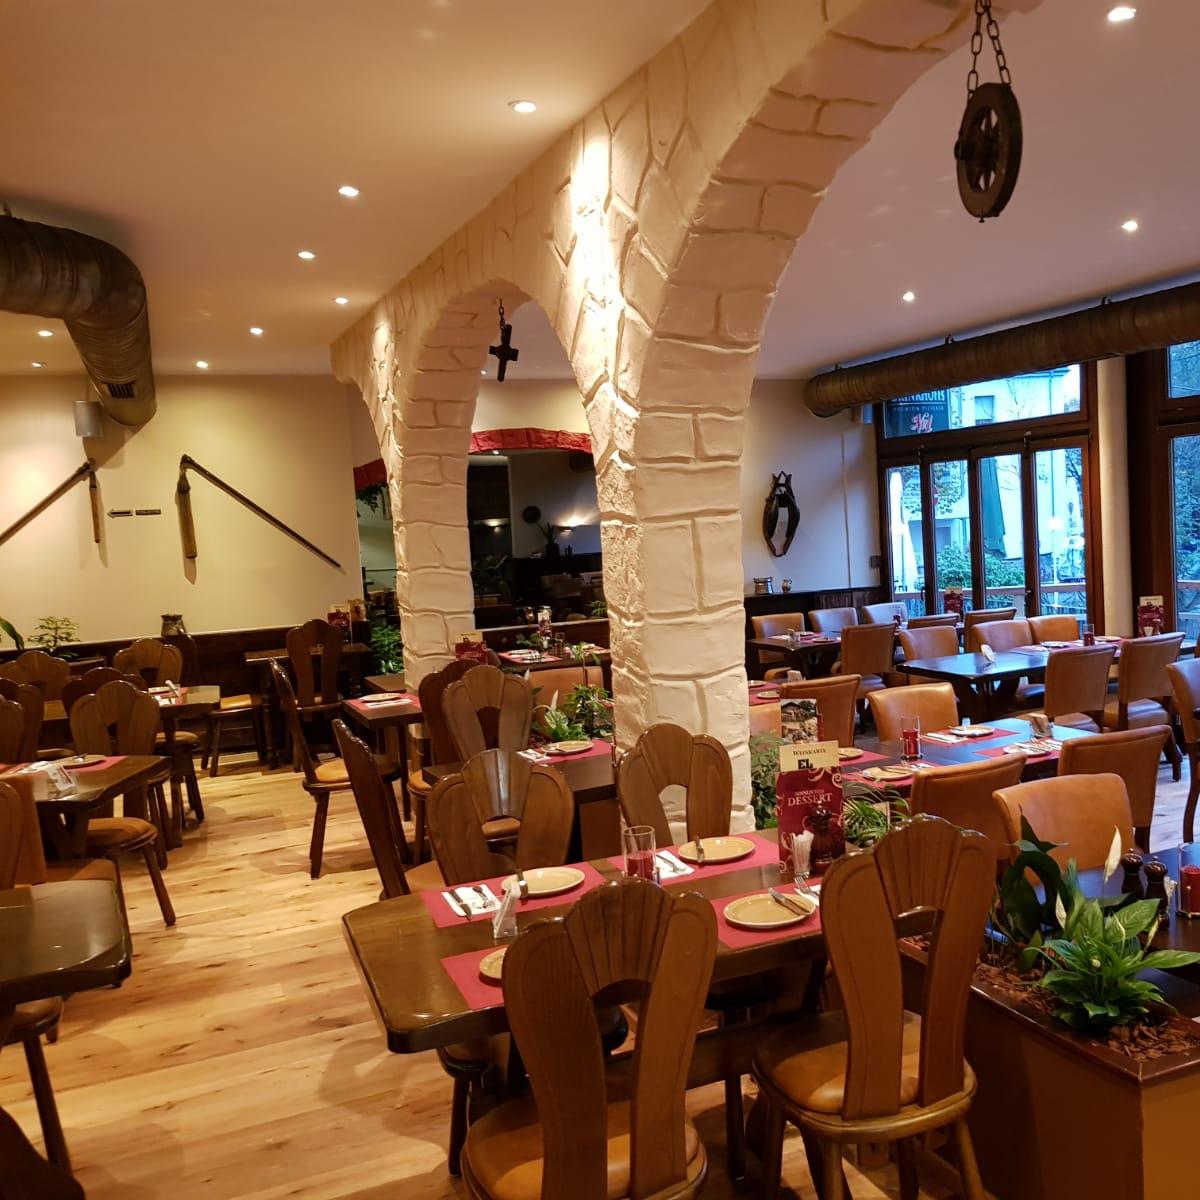 Restaurant "Steakhouse El Rancho" in Paderborn